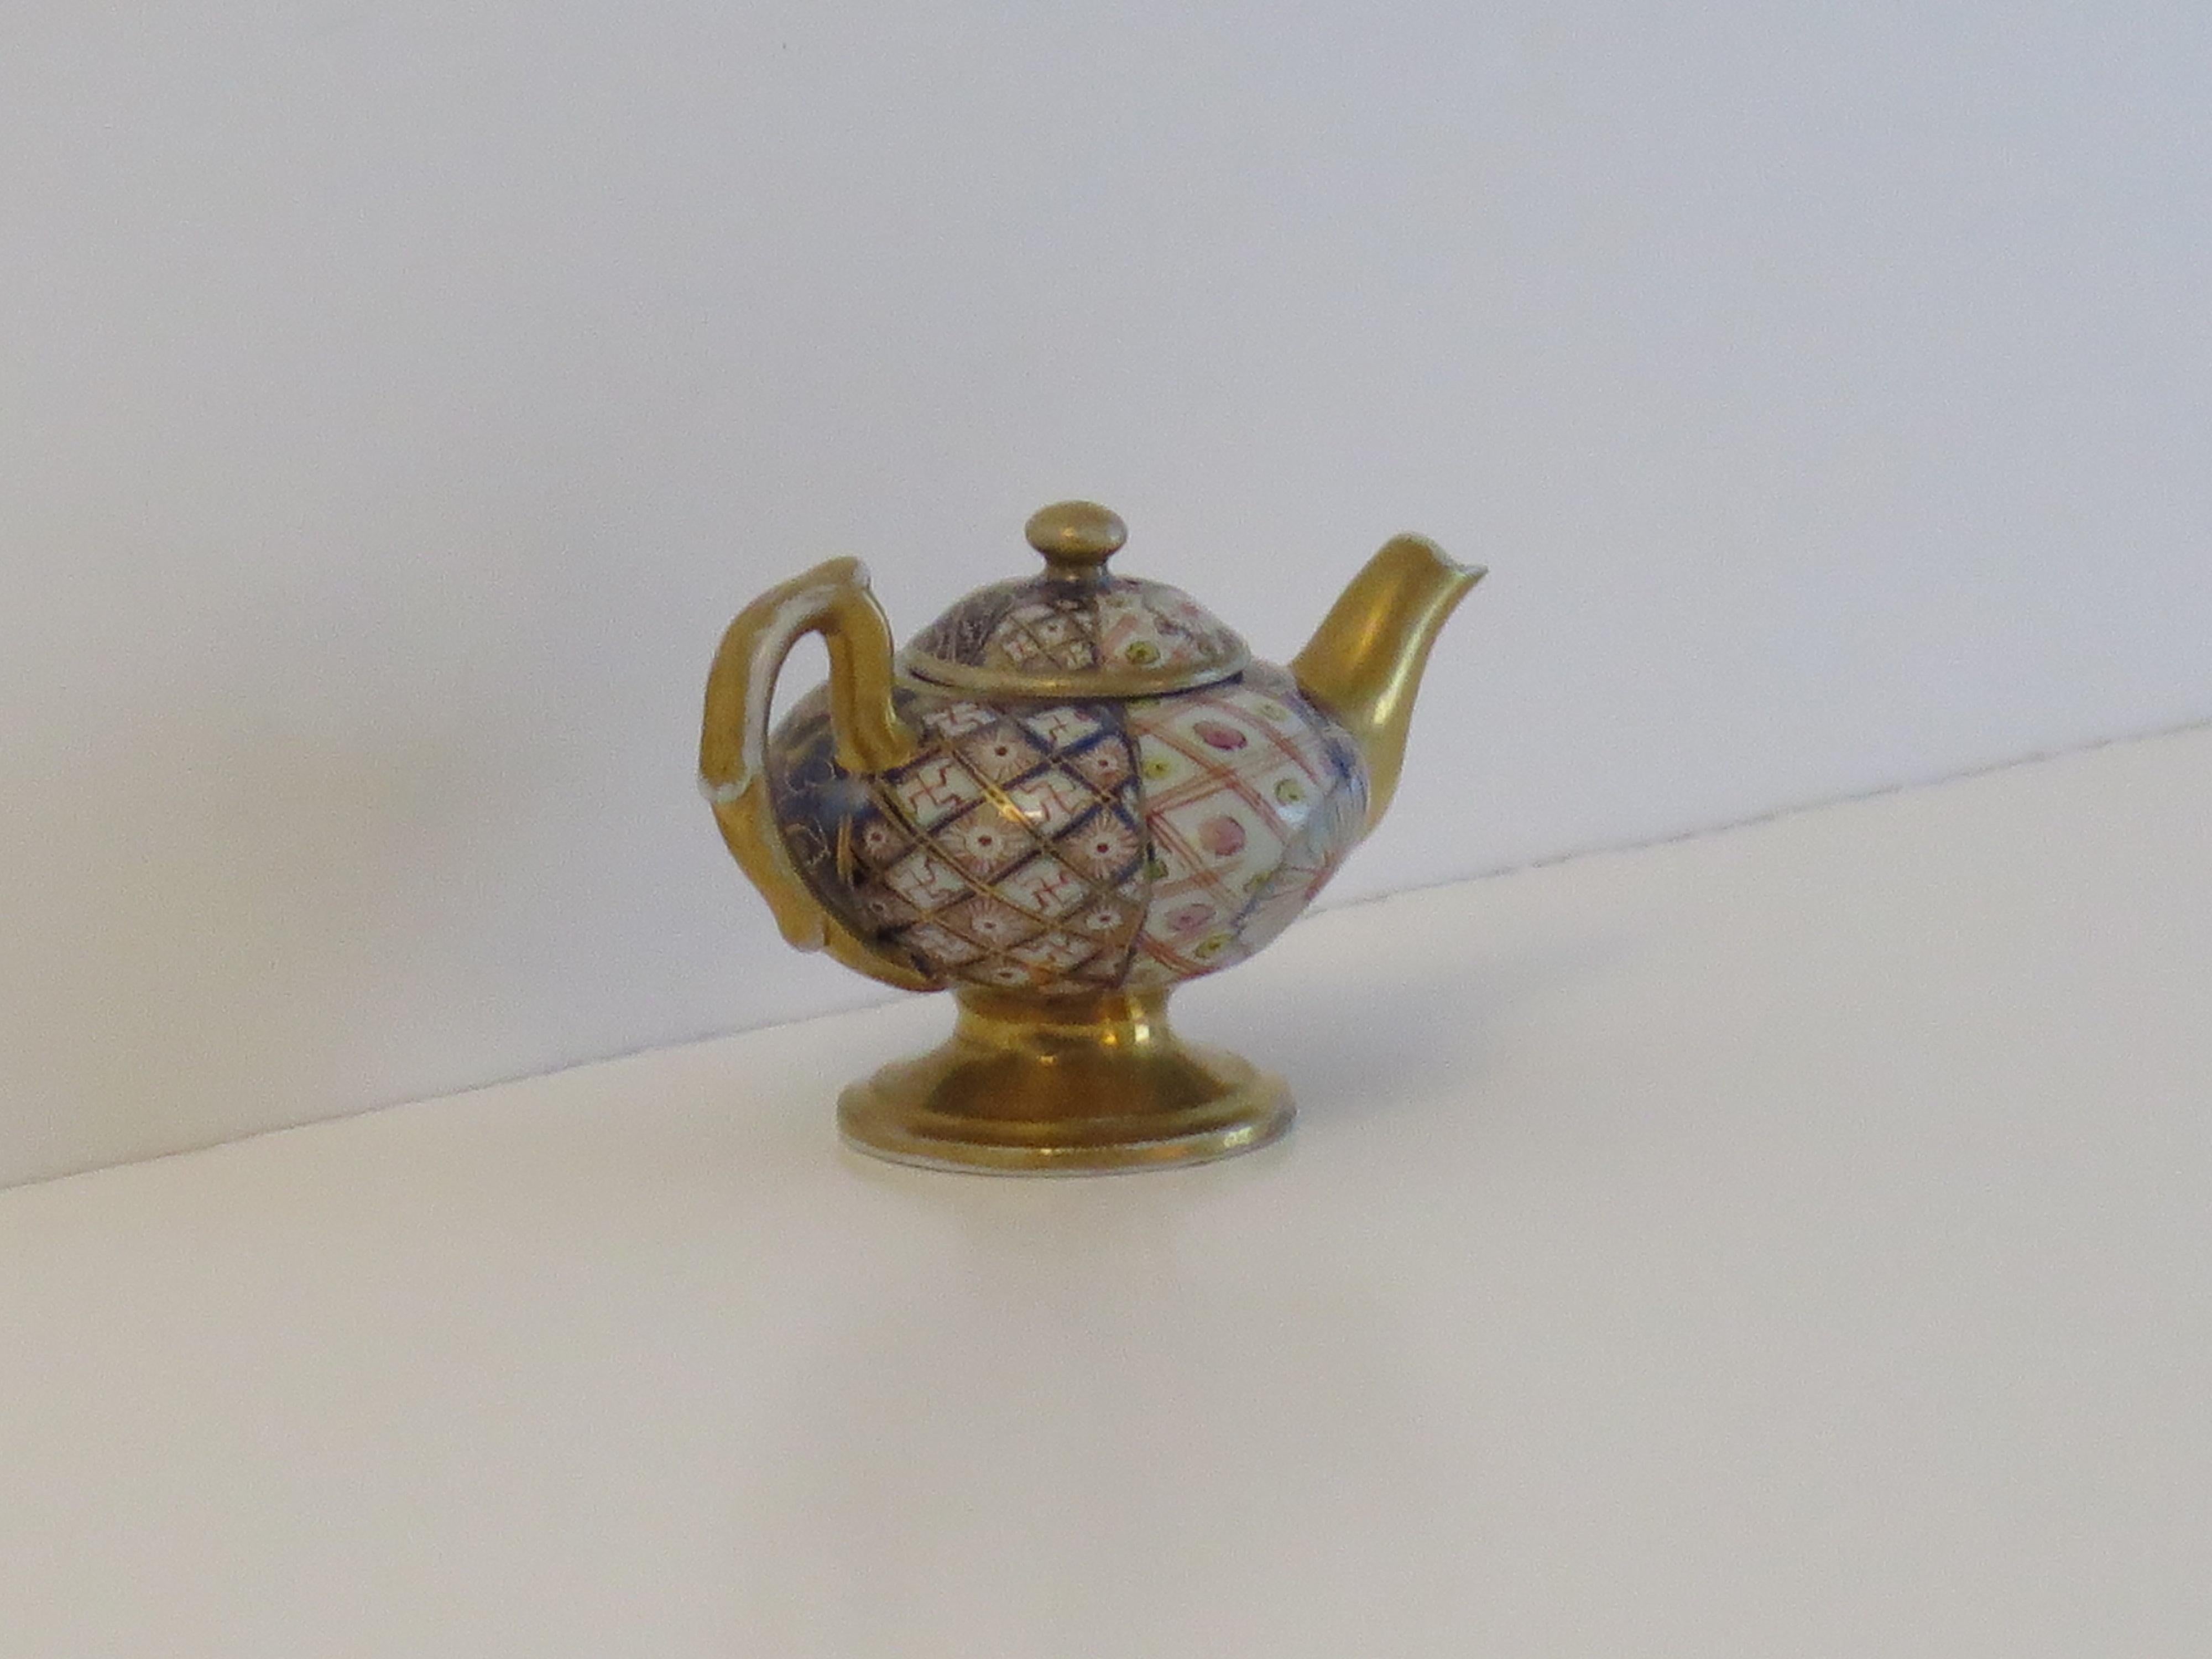 Rare Mason's Ironstone Miniature Teapot in Plaid Japan rare Pattern, circa 1820 For Sale 3